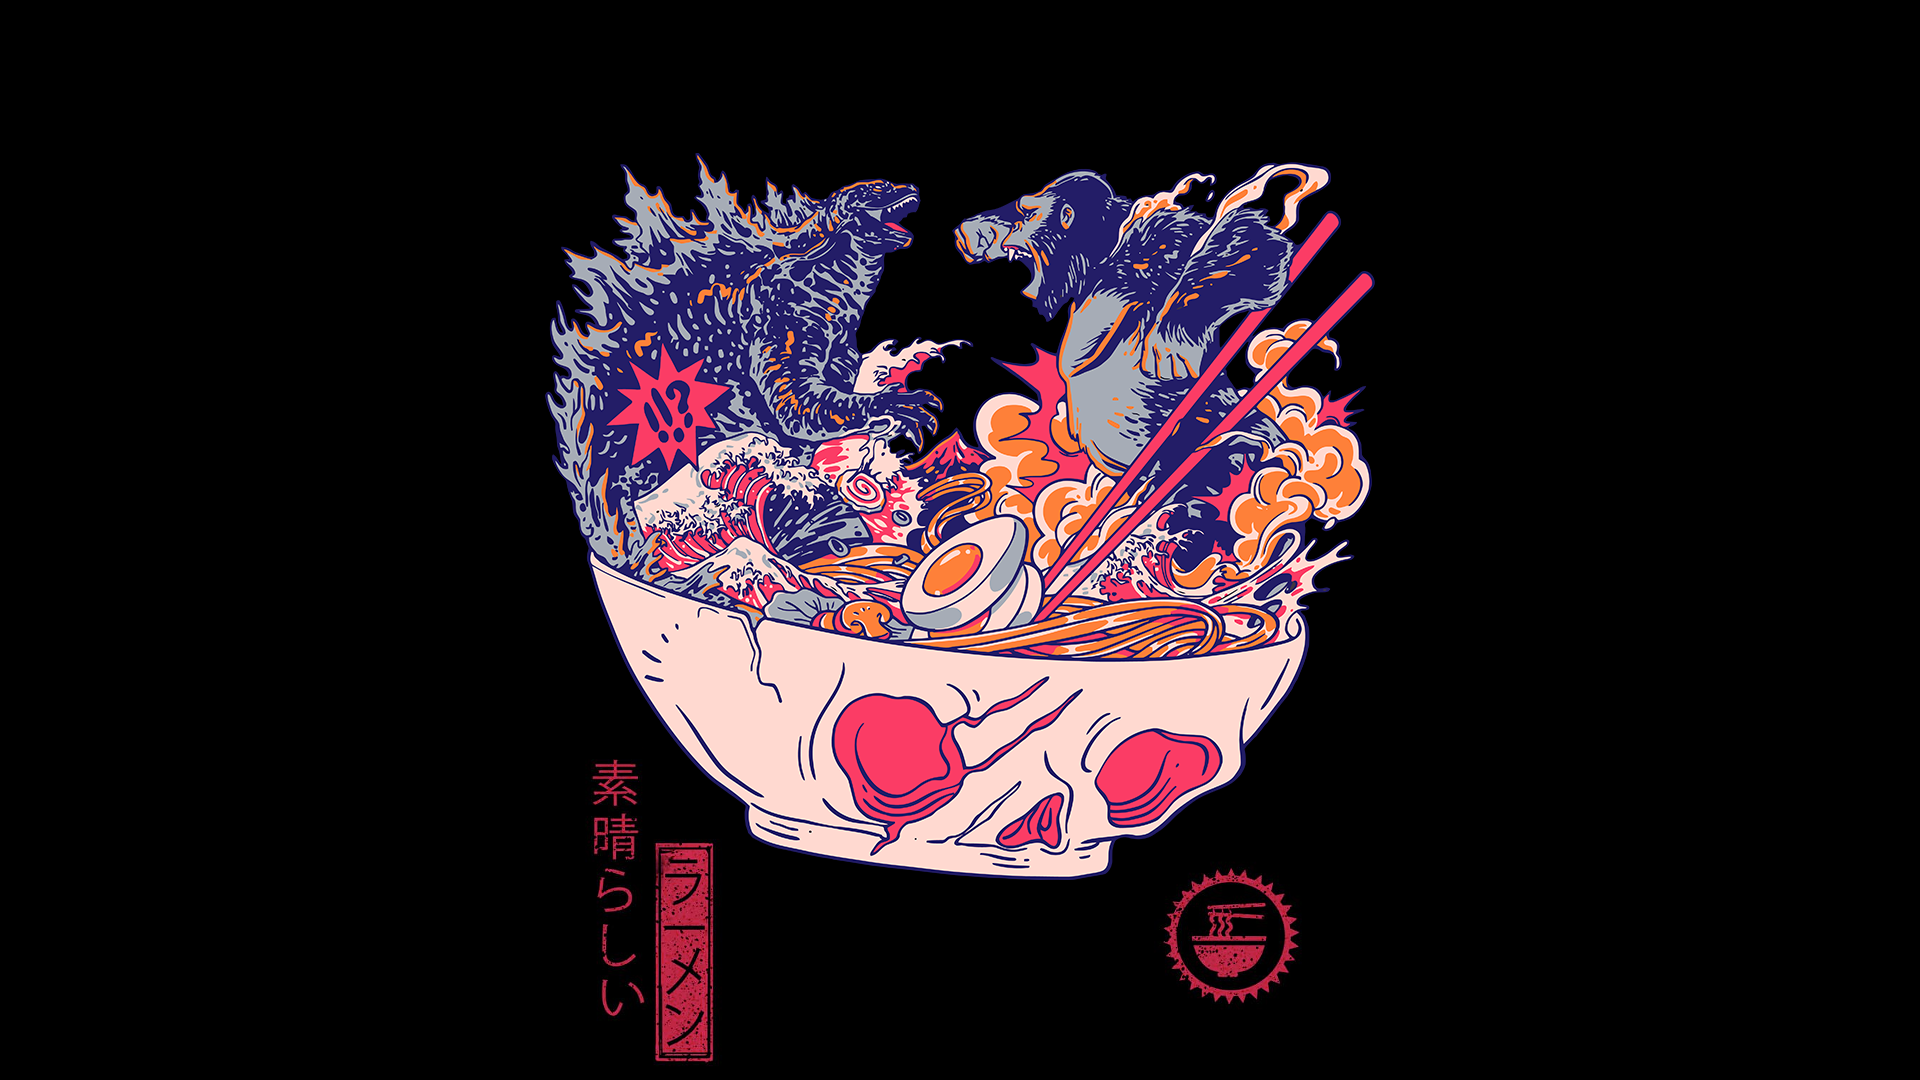 Digital Art Fantasy Art Godzilla King Kong Godzilla Vs Kong Ramen Eggs Waves Chopsticks Noodles Mush 1920x1080